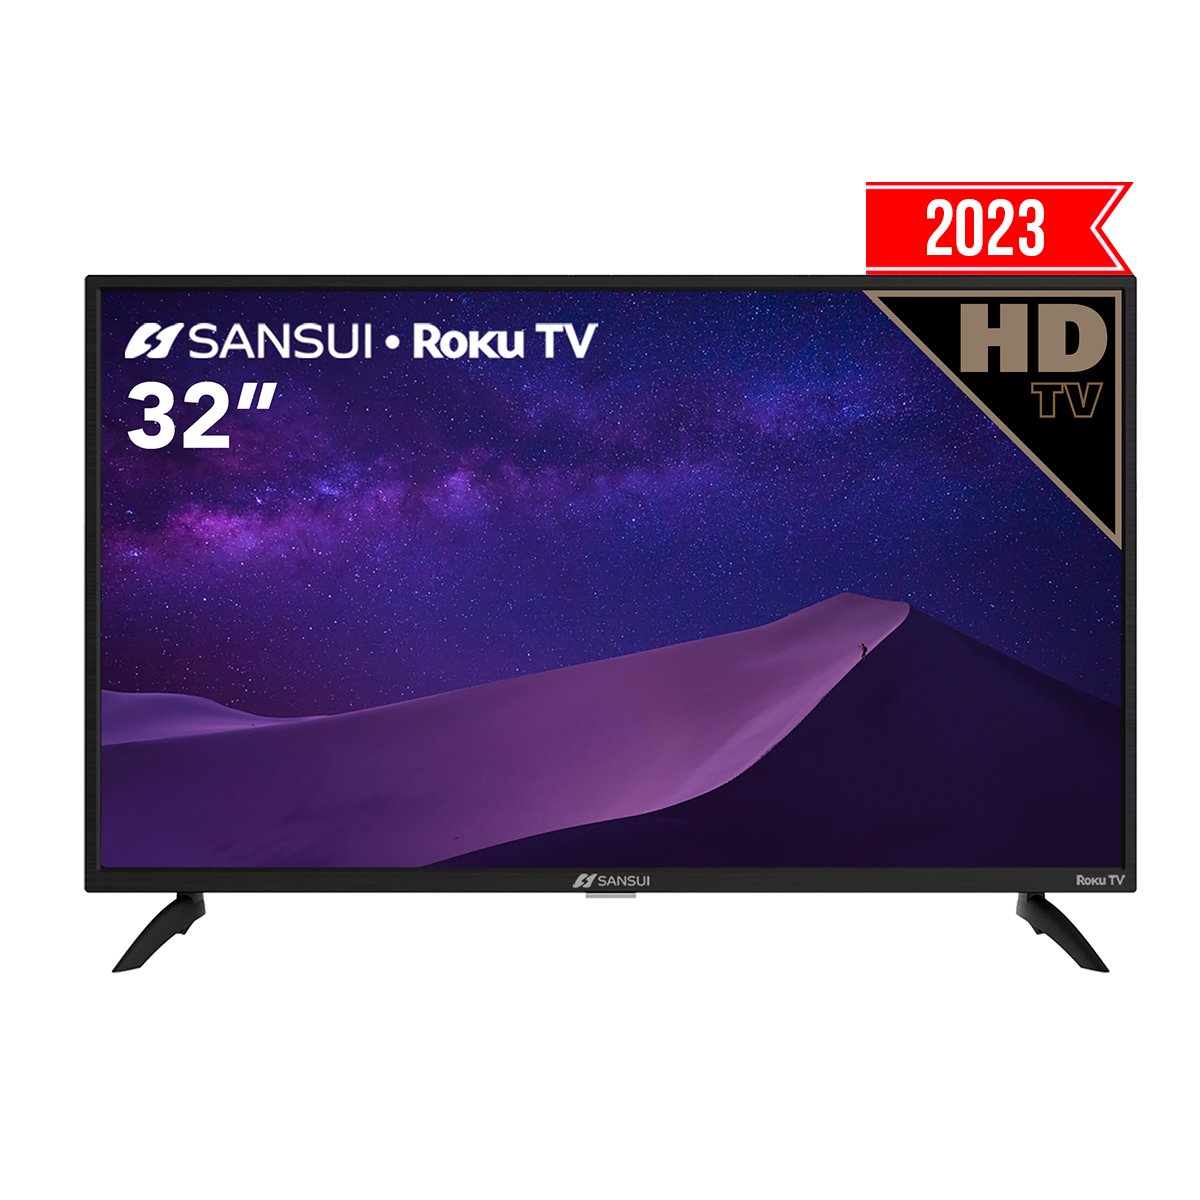 Pantalla Samsung Smart TV 32 Pulgadas Series 4 UN32M4500BFXZA, HD LED Tizen